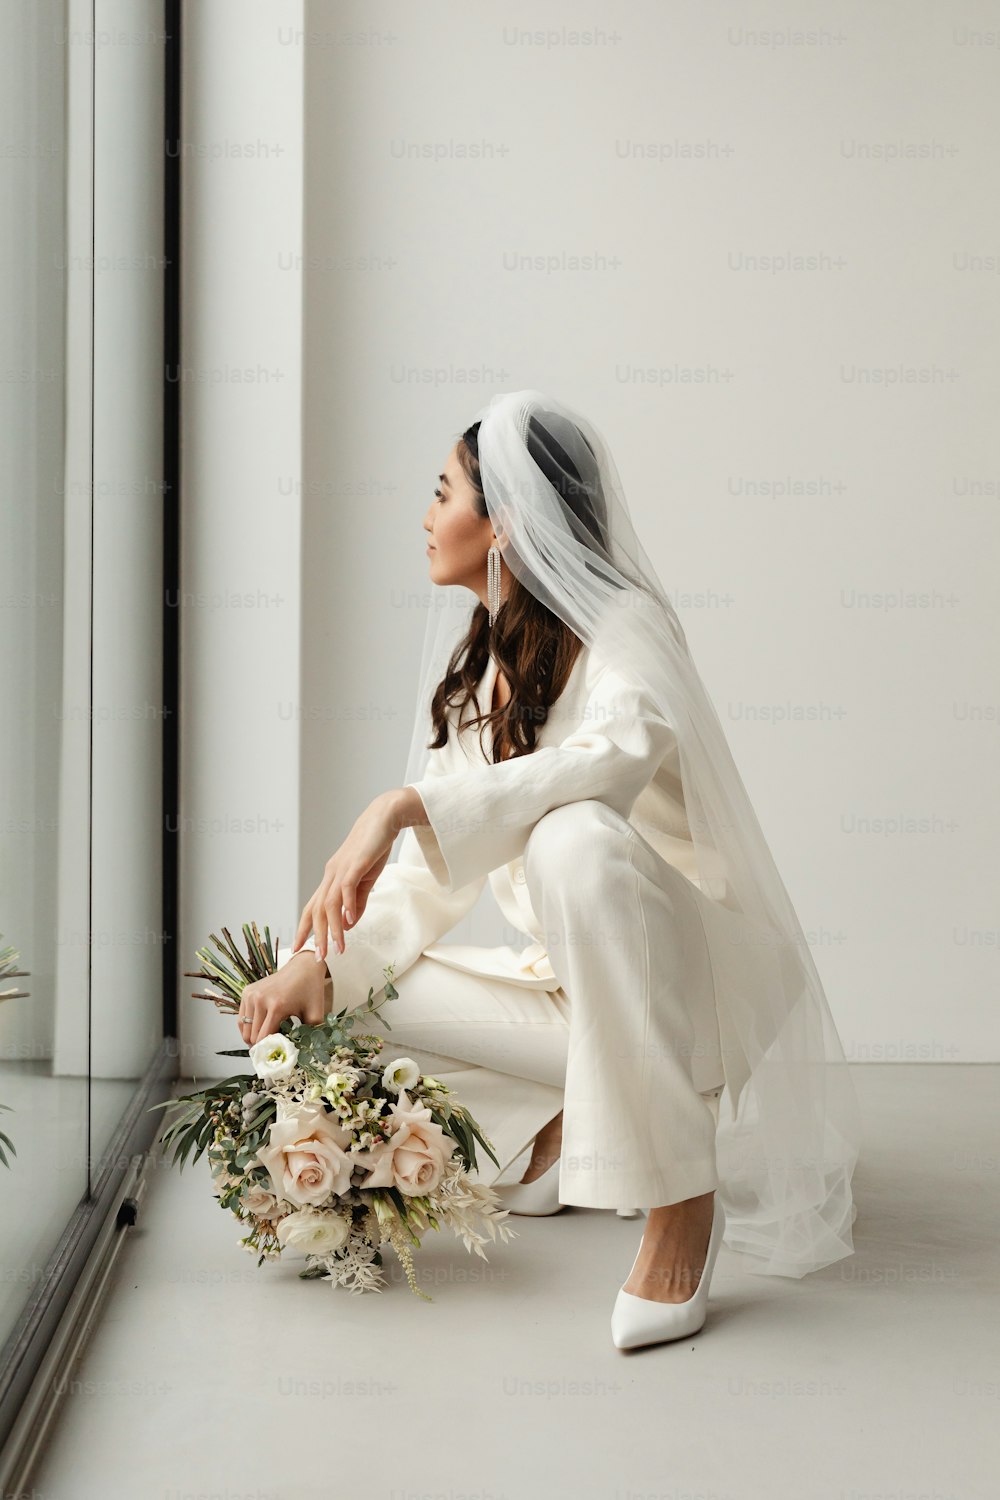 a woman in a wedding dress kneeling down next to a window